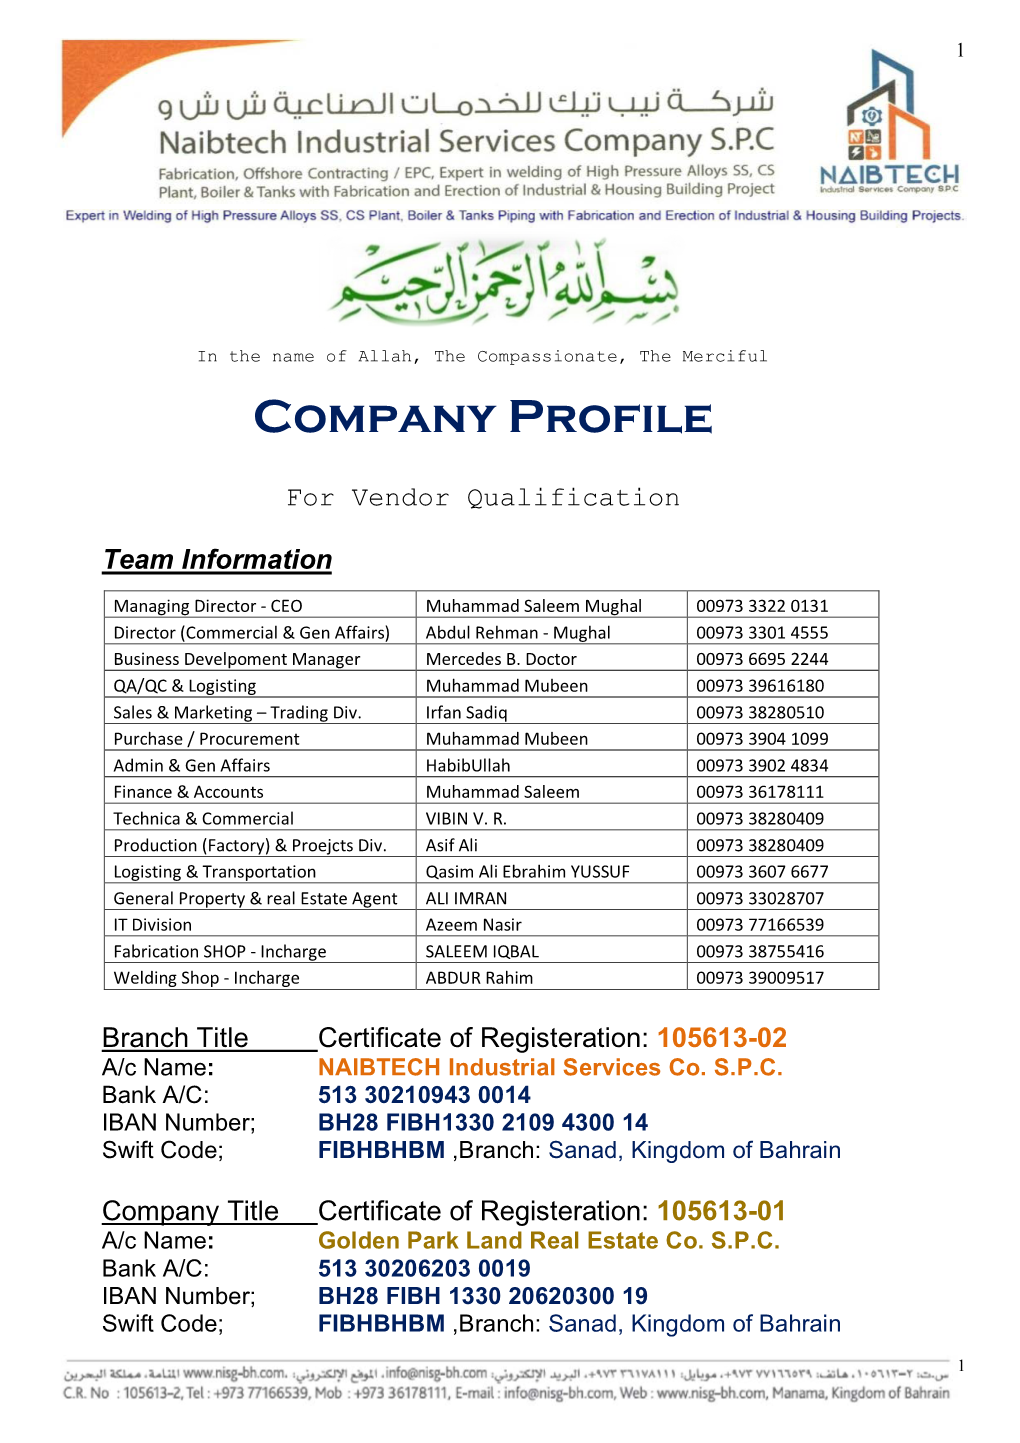 NBTCH-Company-Profile-Rev-02.Pdf